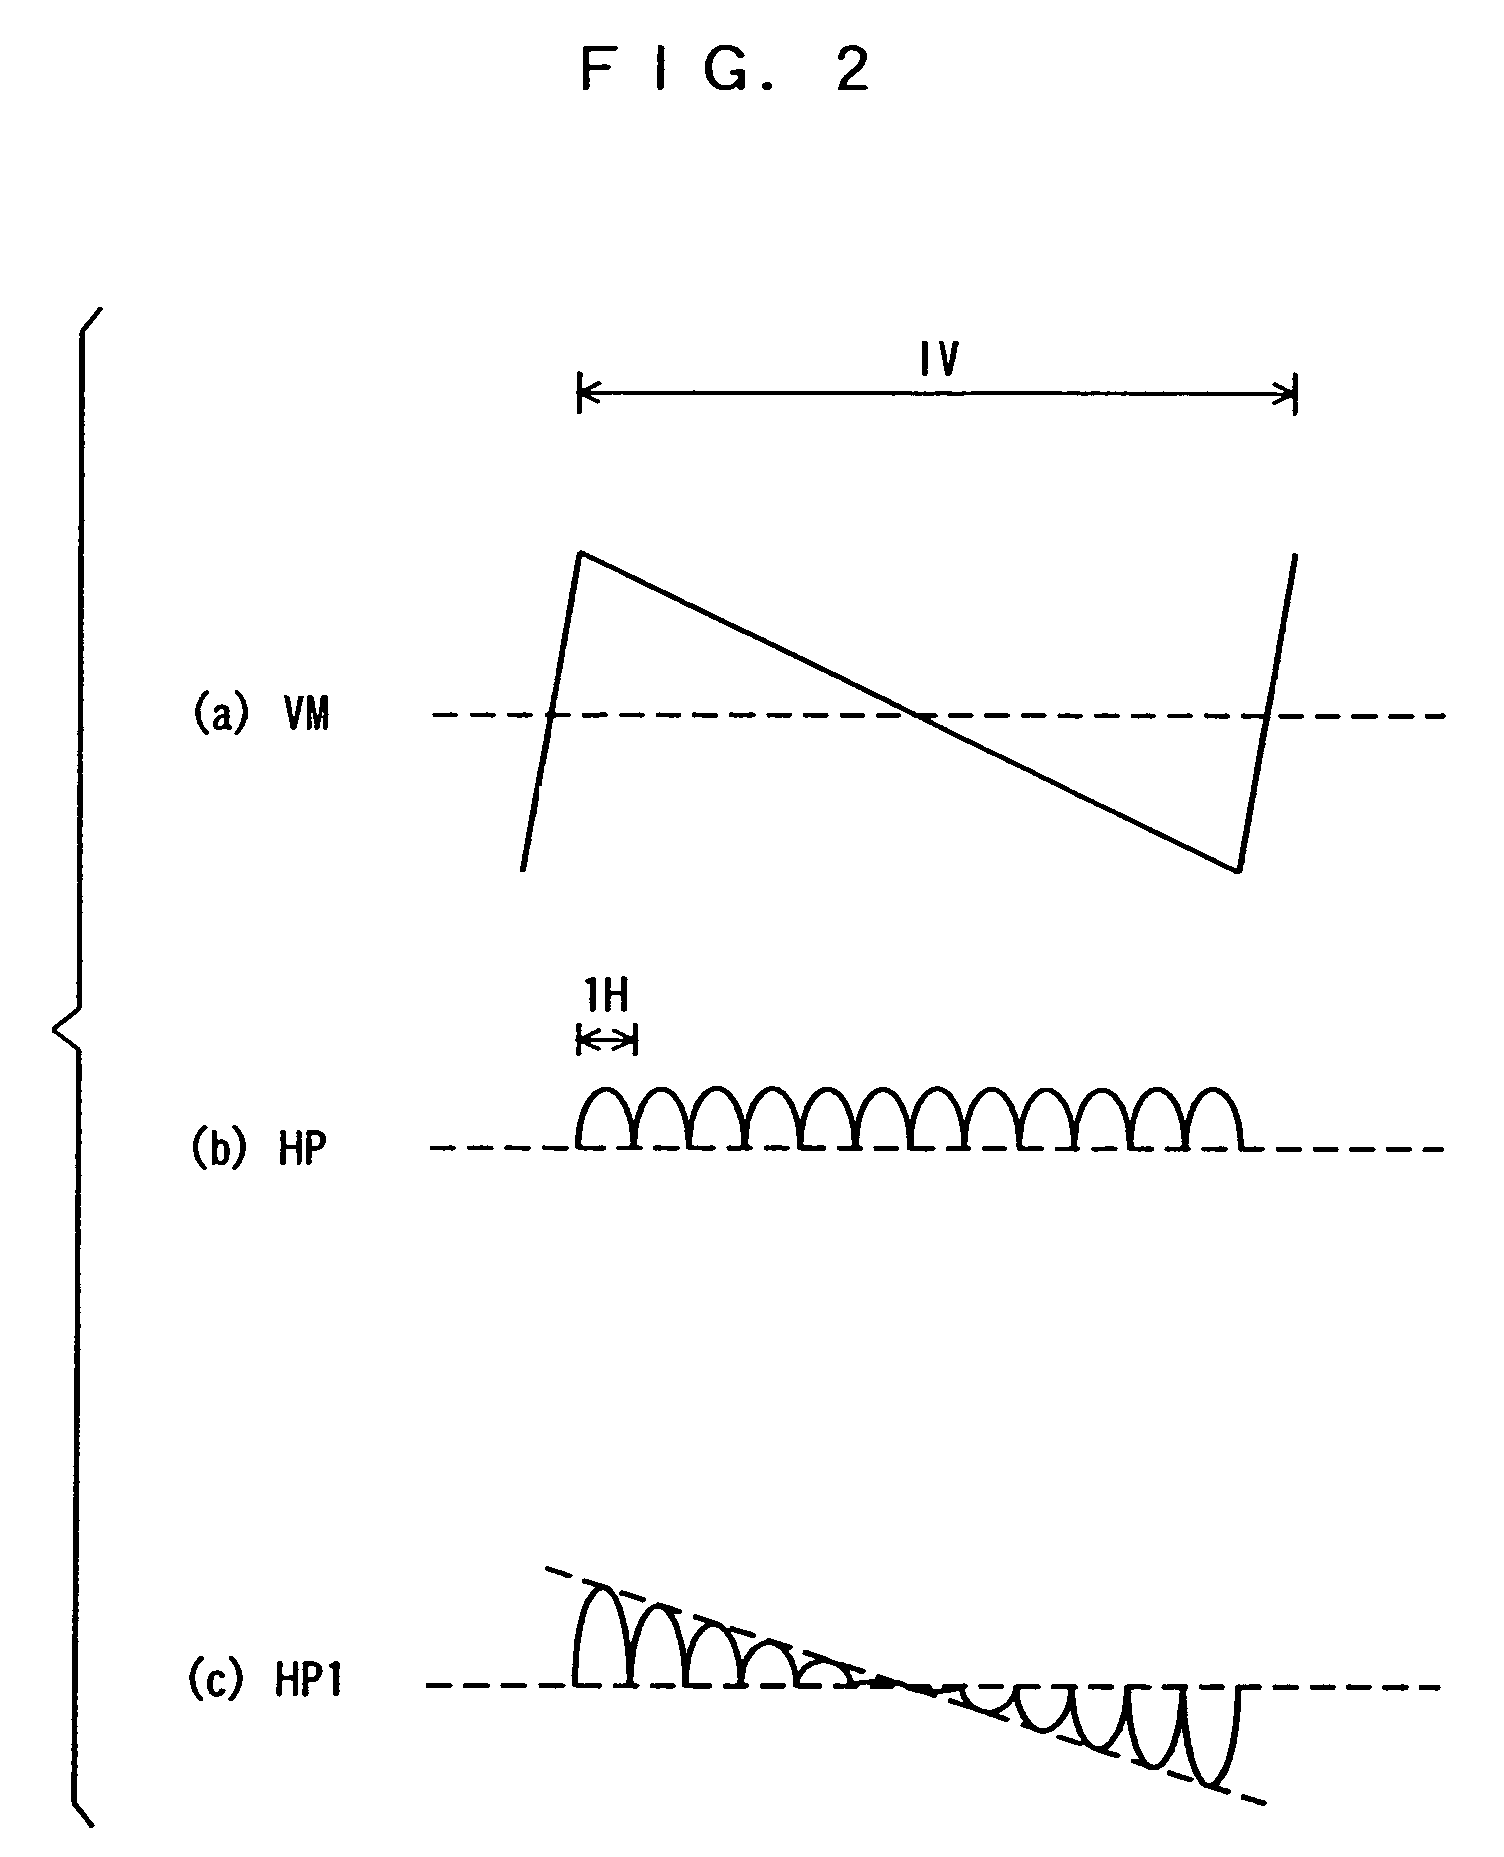 Vertical deflection apparatus